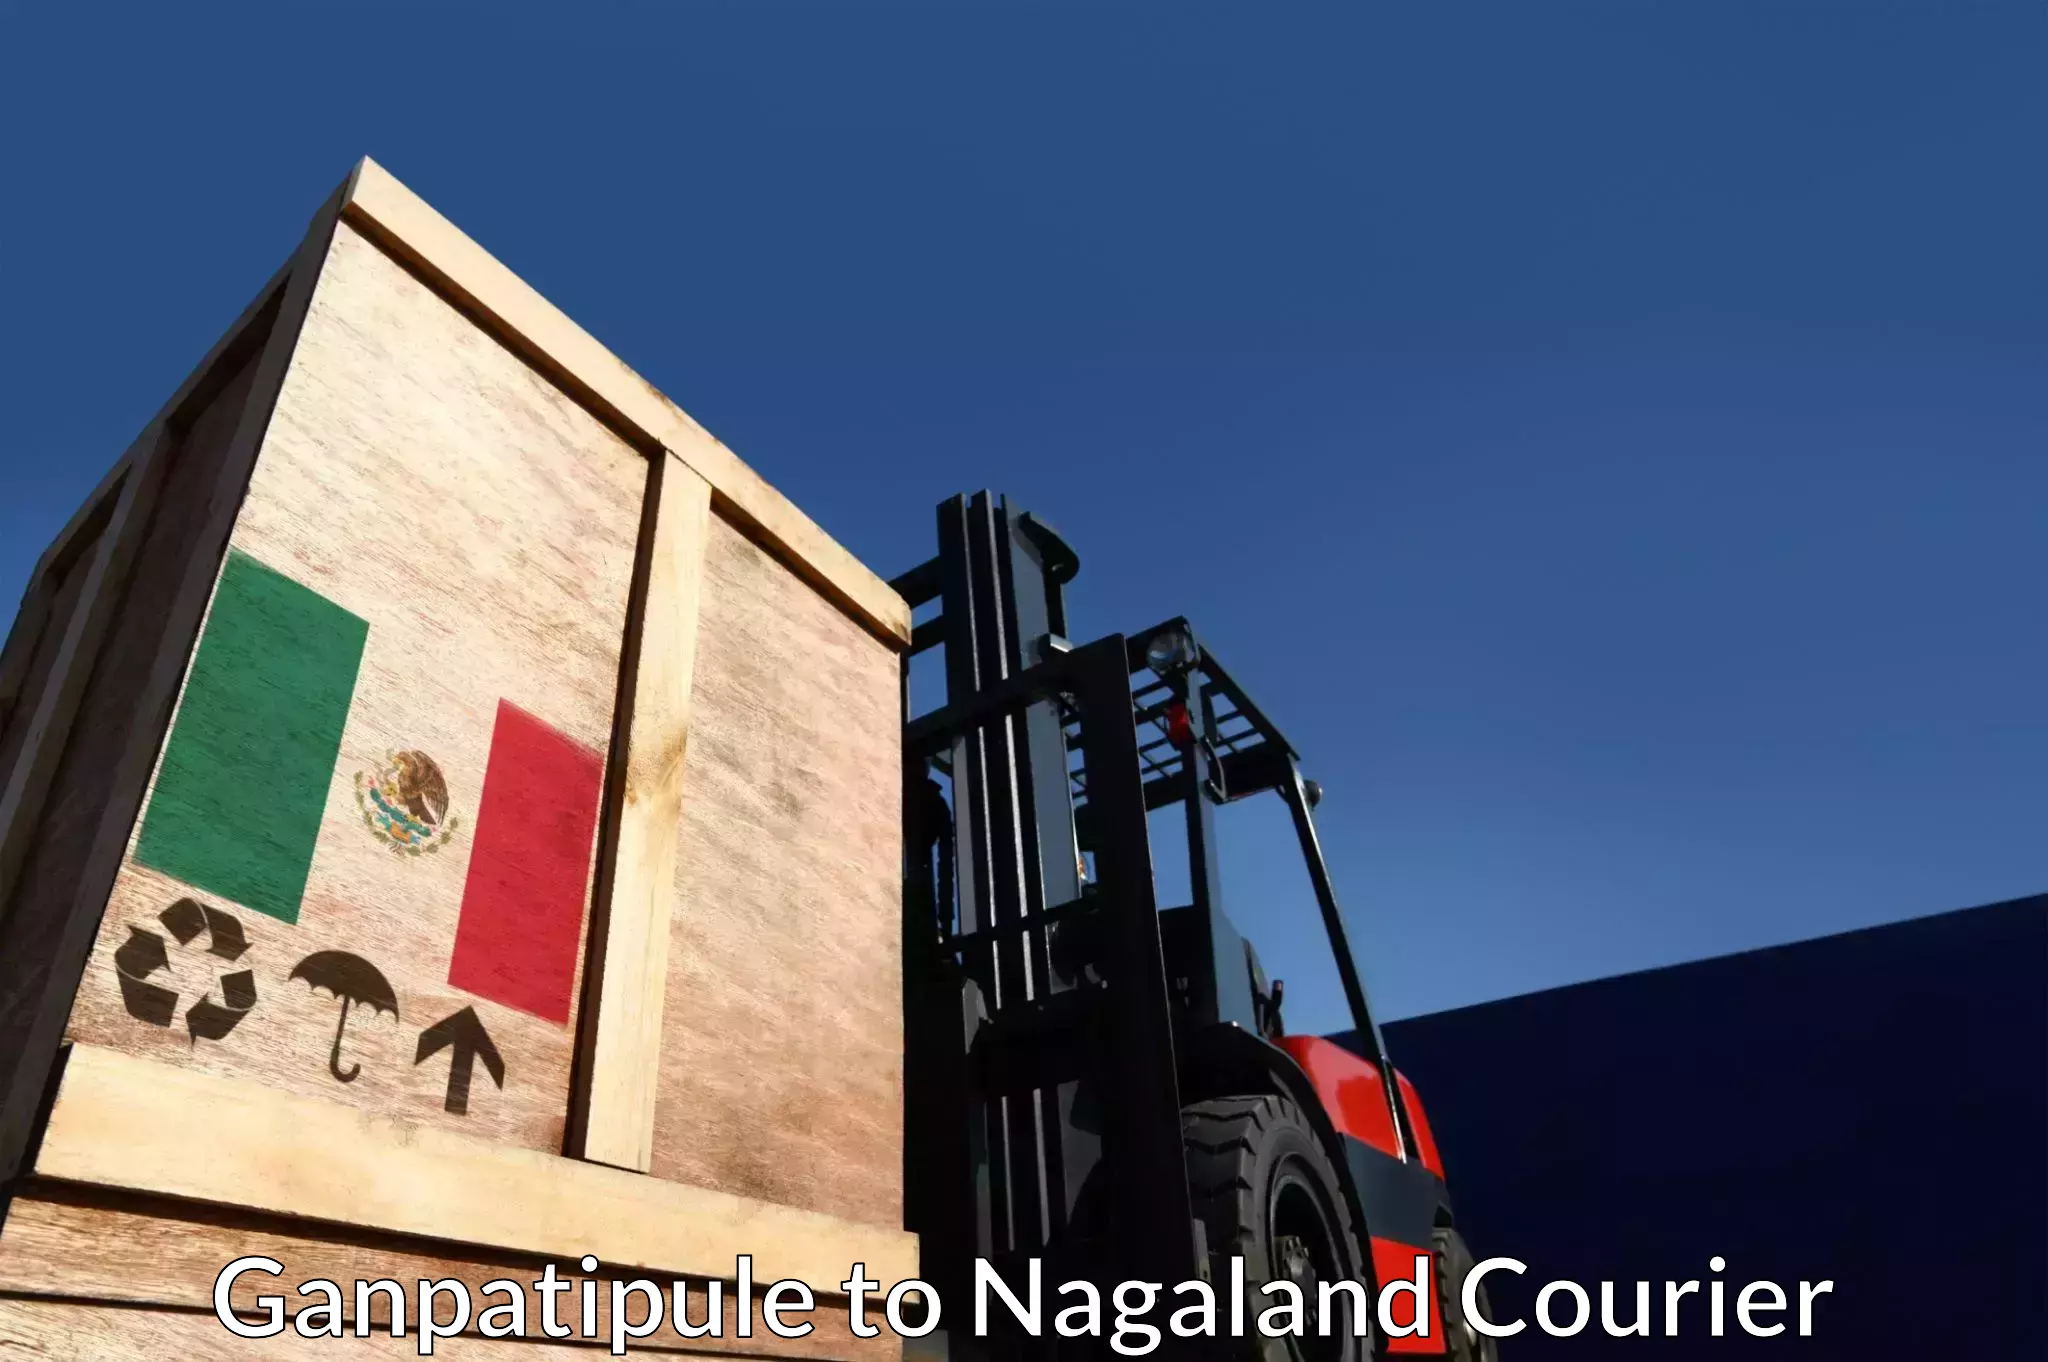 Global logistics network Ganpatipule to Nagaland